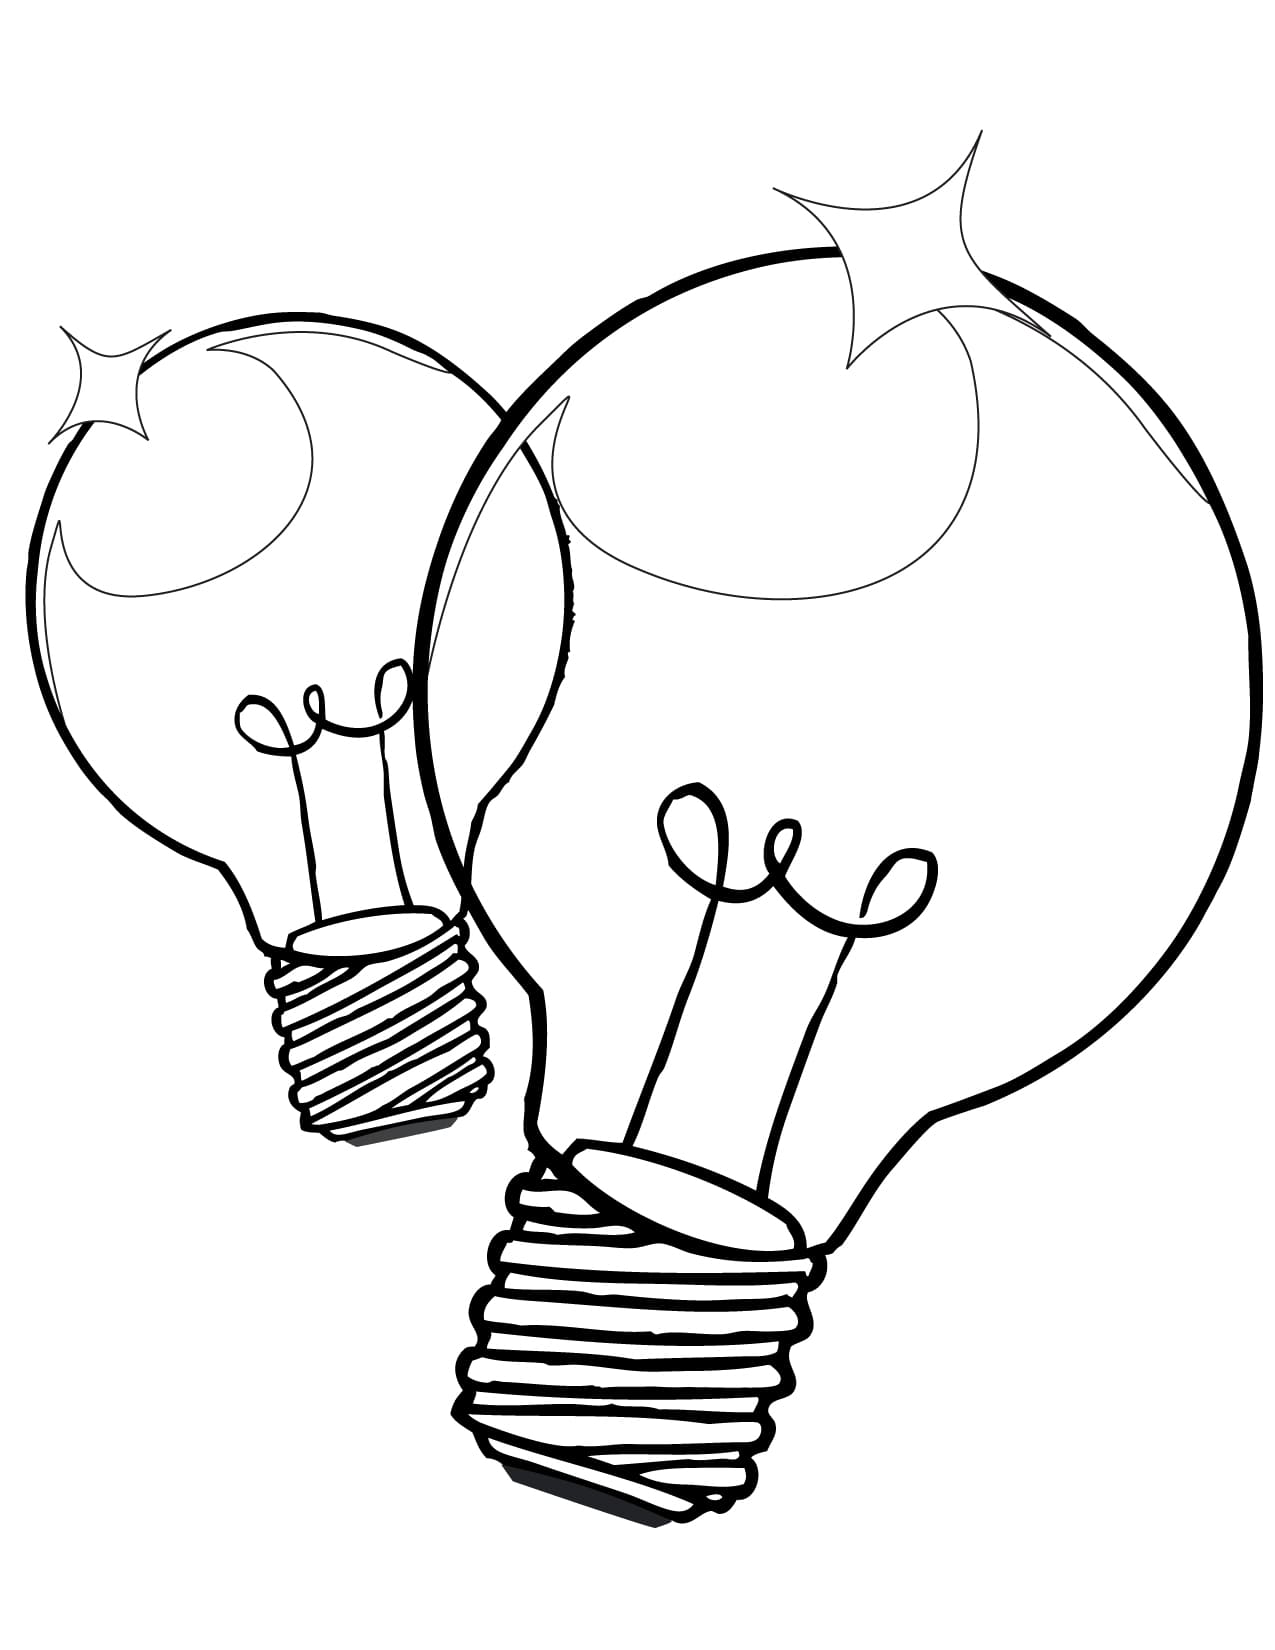 Christmas Light Bulb Image For Kids Coloring Page